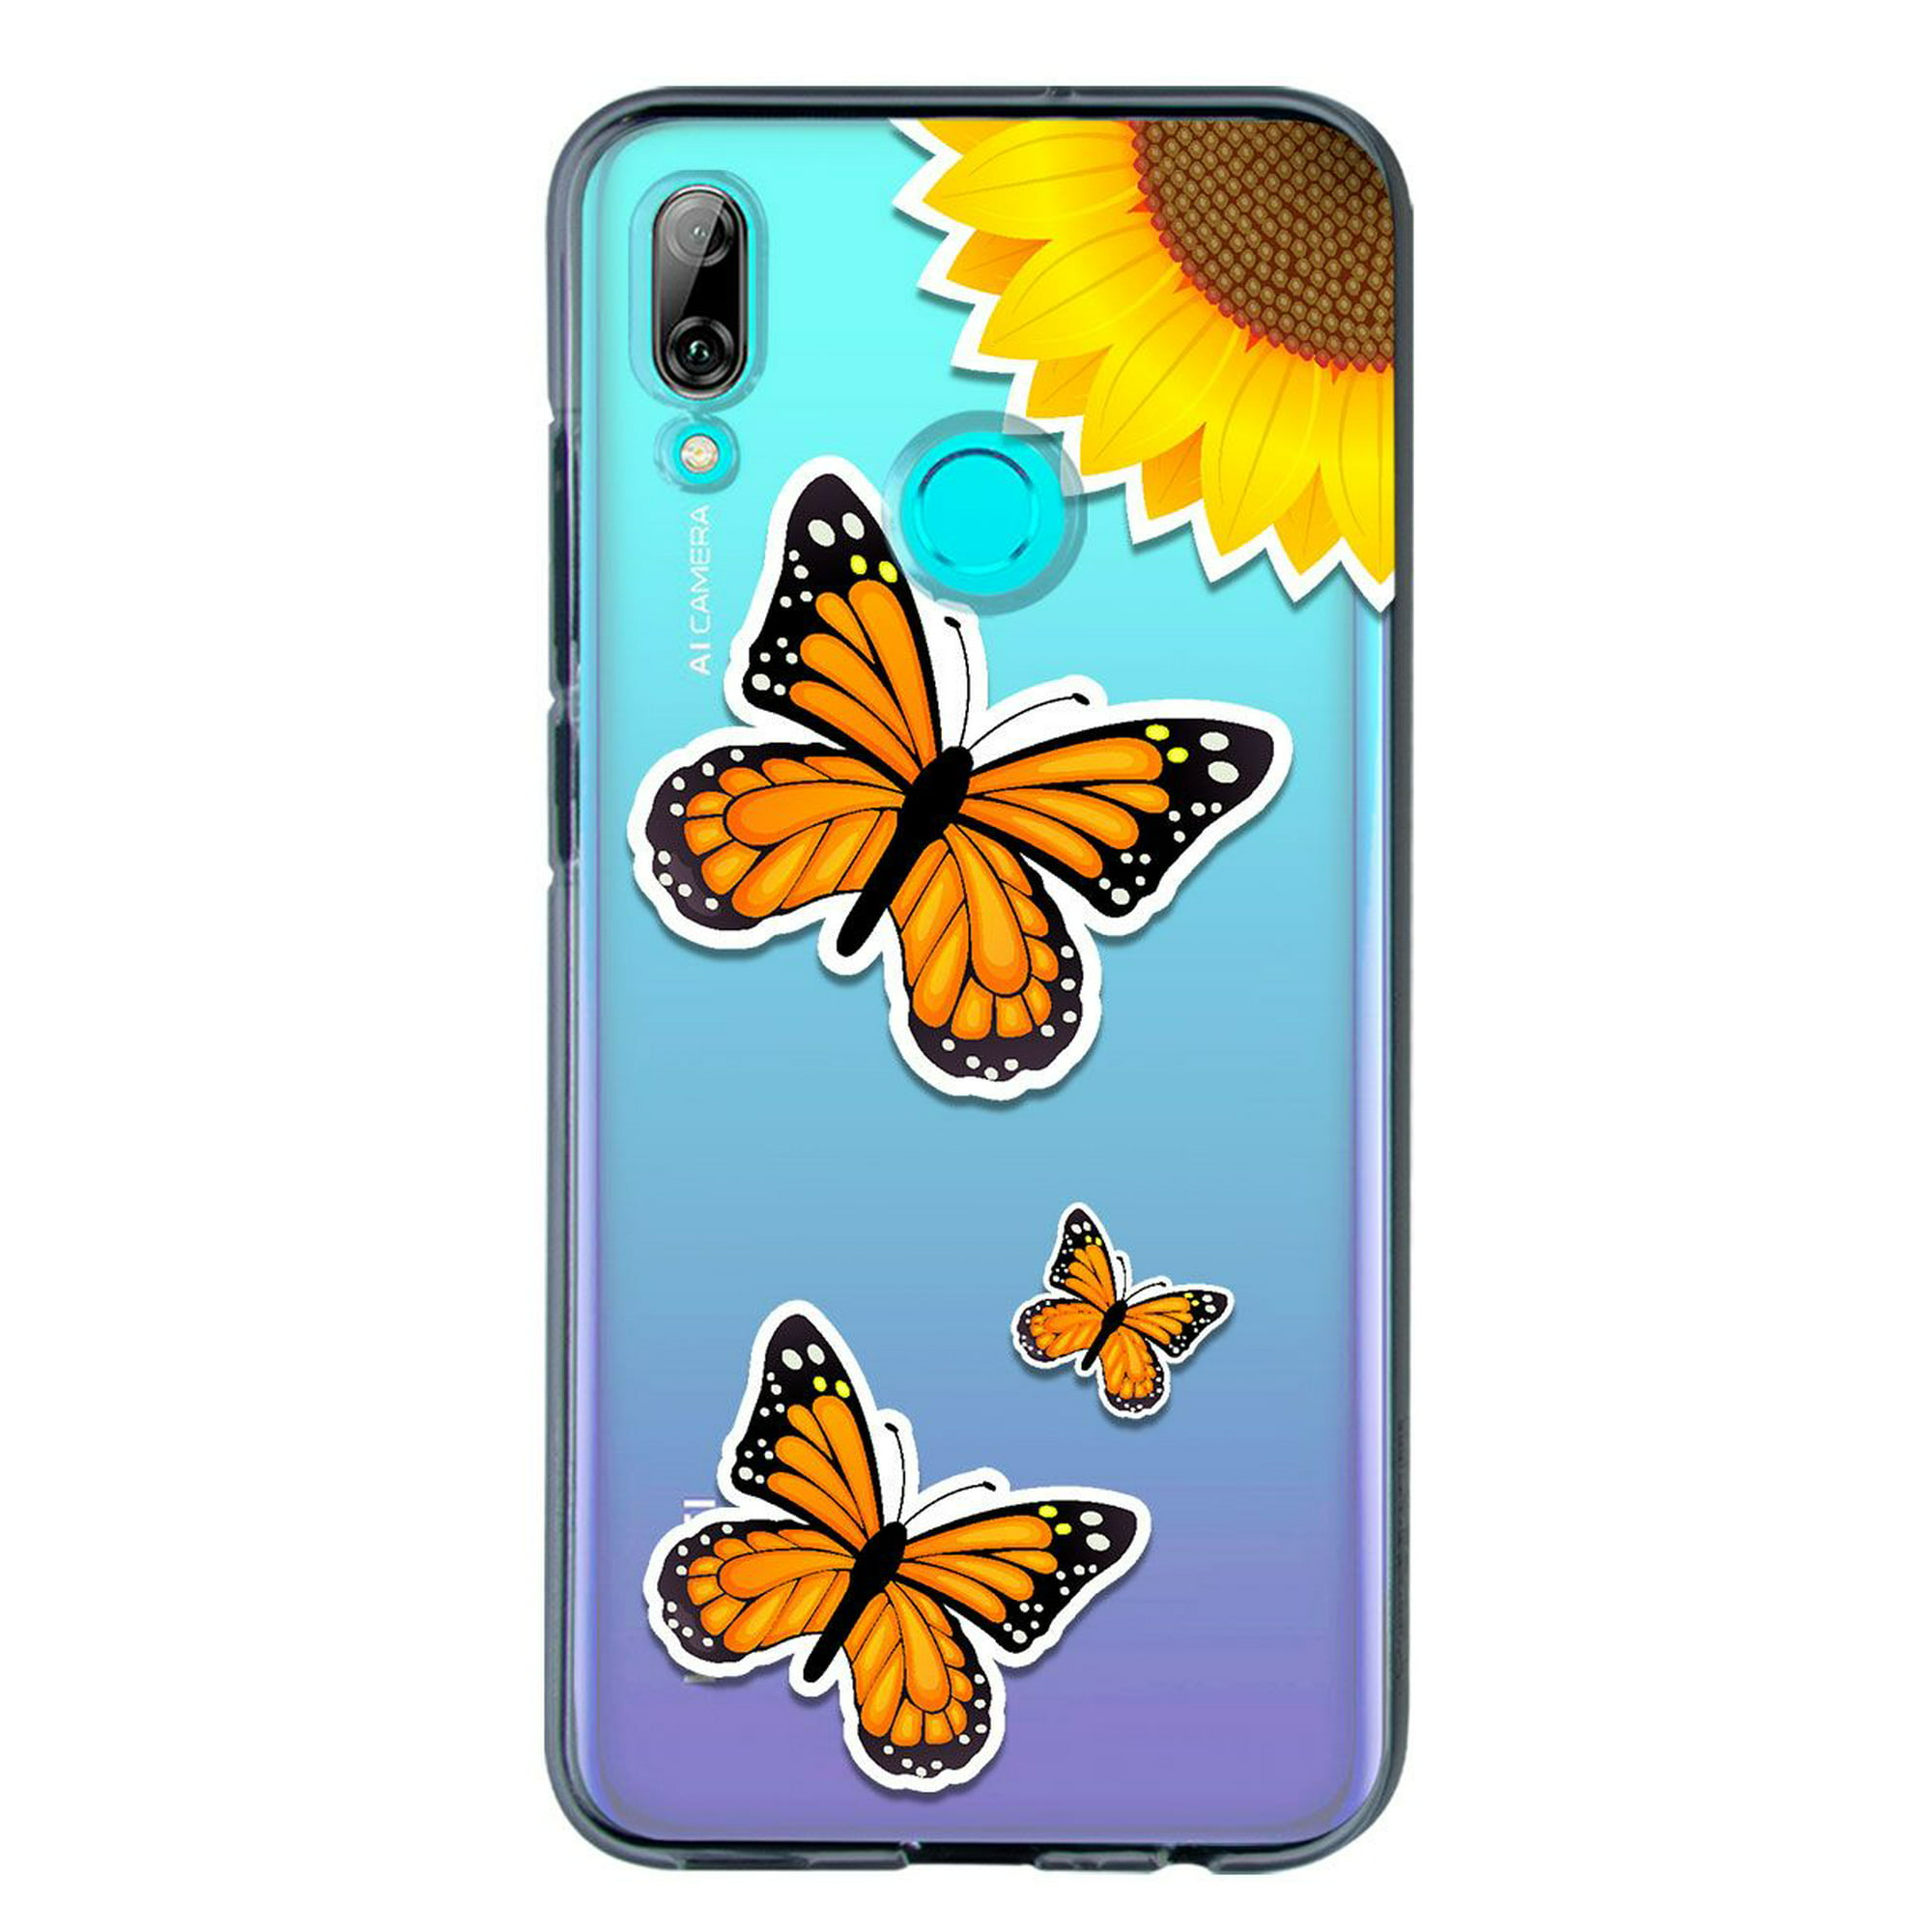 Funda para huawei p smart 2019 mariposas monarca, uso rudo, instacase protector para huawei p smart 2019 antigolpes, case mariposas monarca